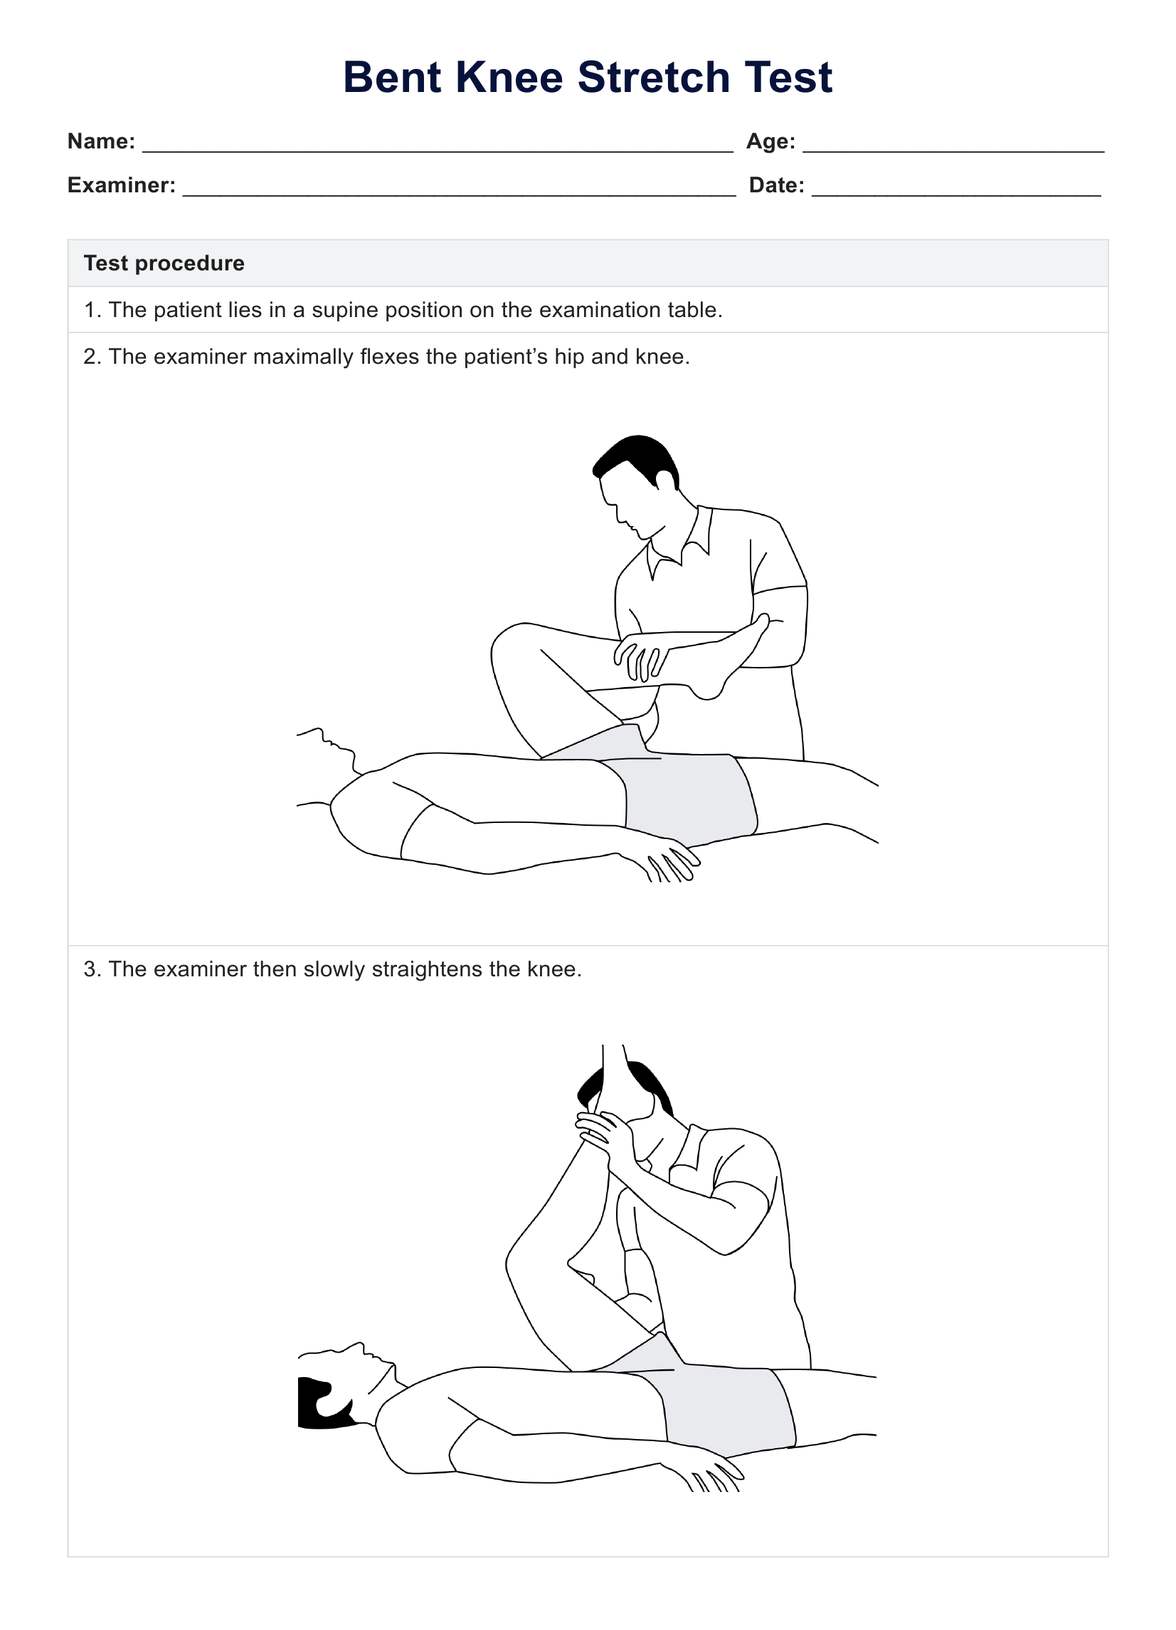 Bent Knee Stretch Test PDF Example